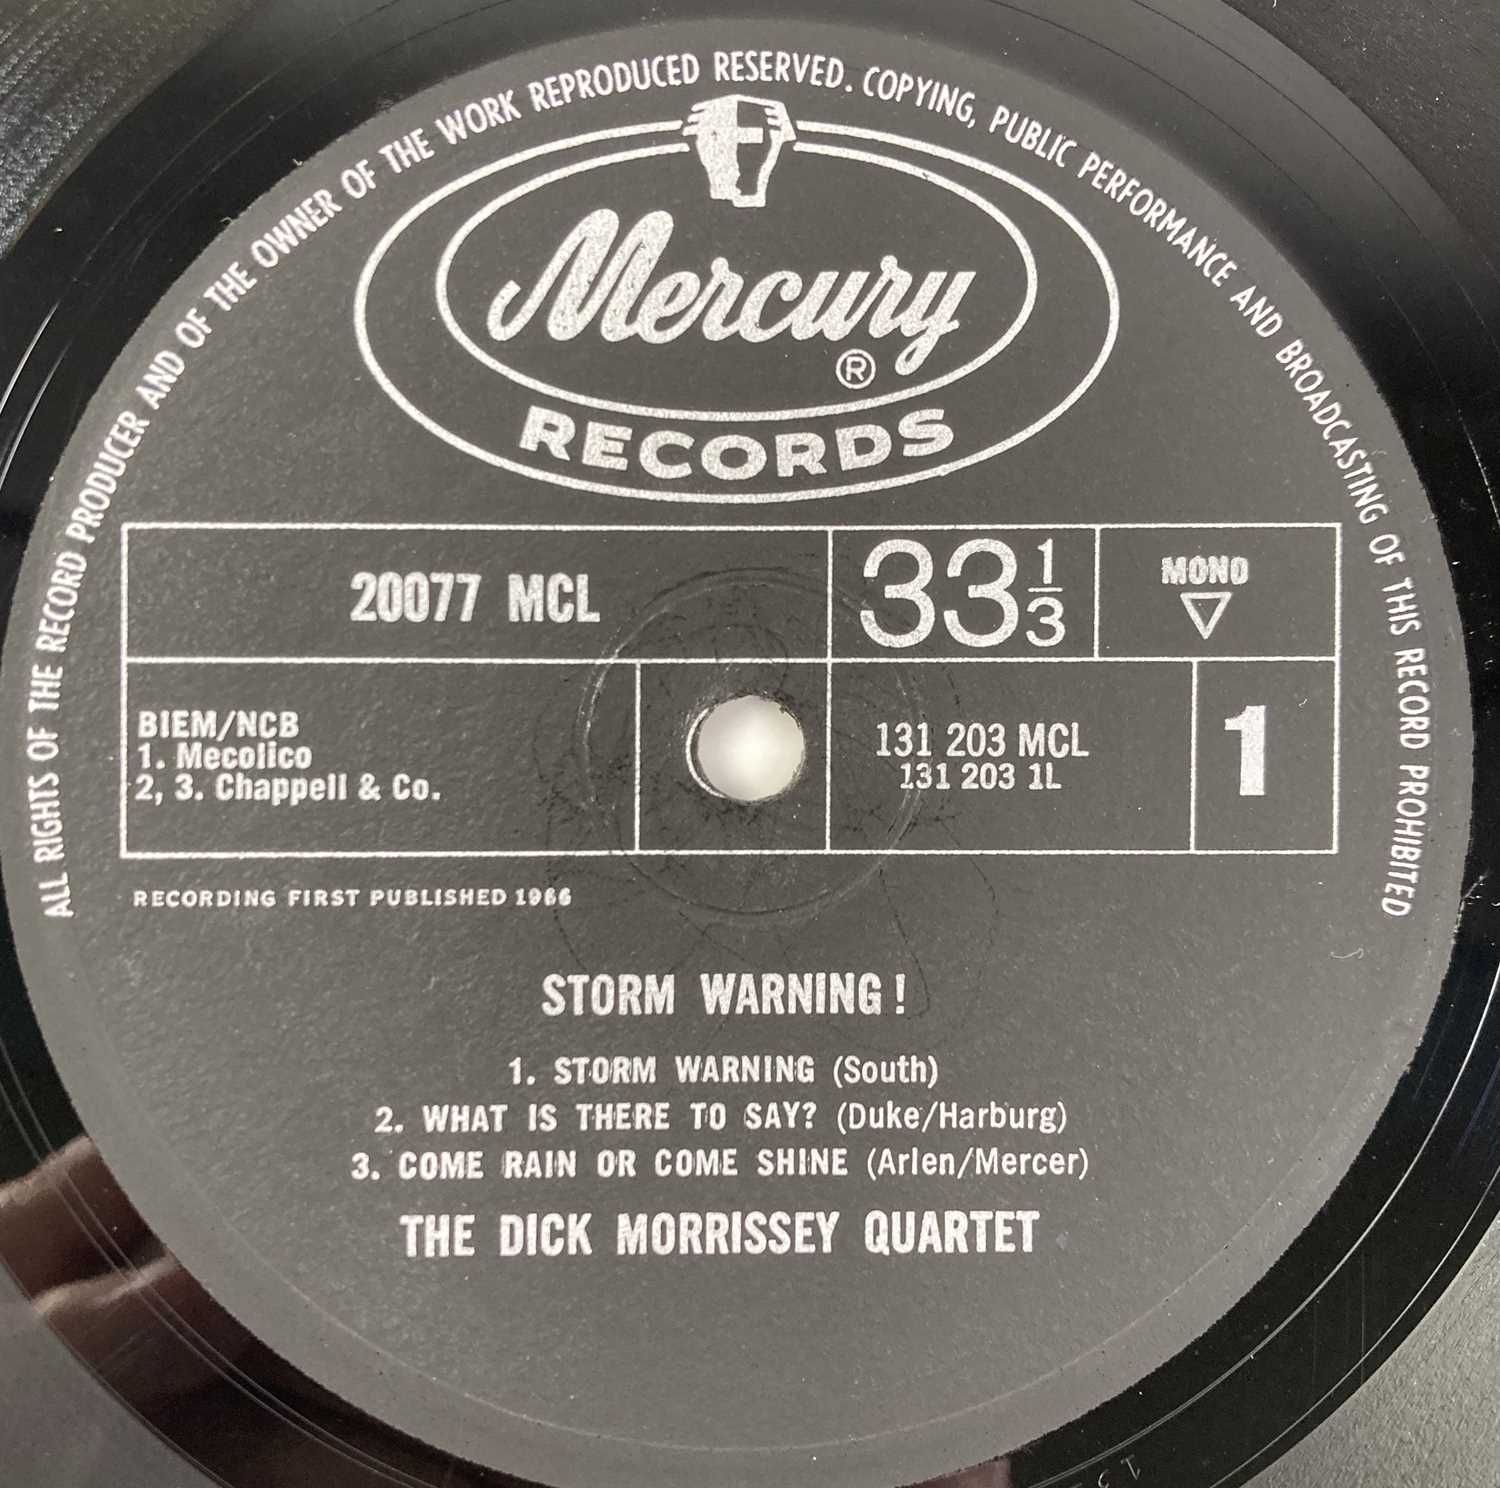 THE DICK MORRISSEY QUARTET - SOTRM WARNING! LP (ORIGINAL UK COPY - MERCURY 20077 MCL) - Image 4 of 5